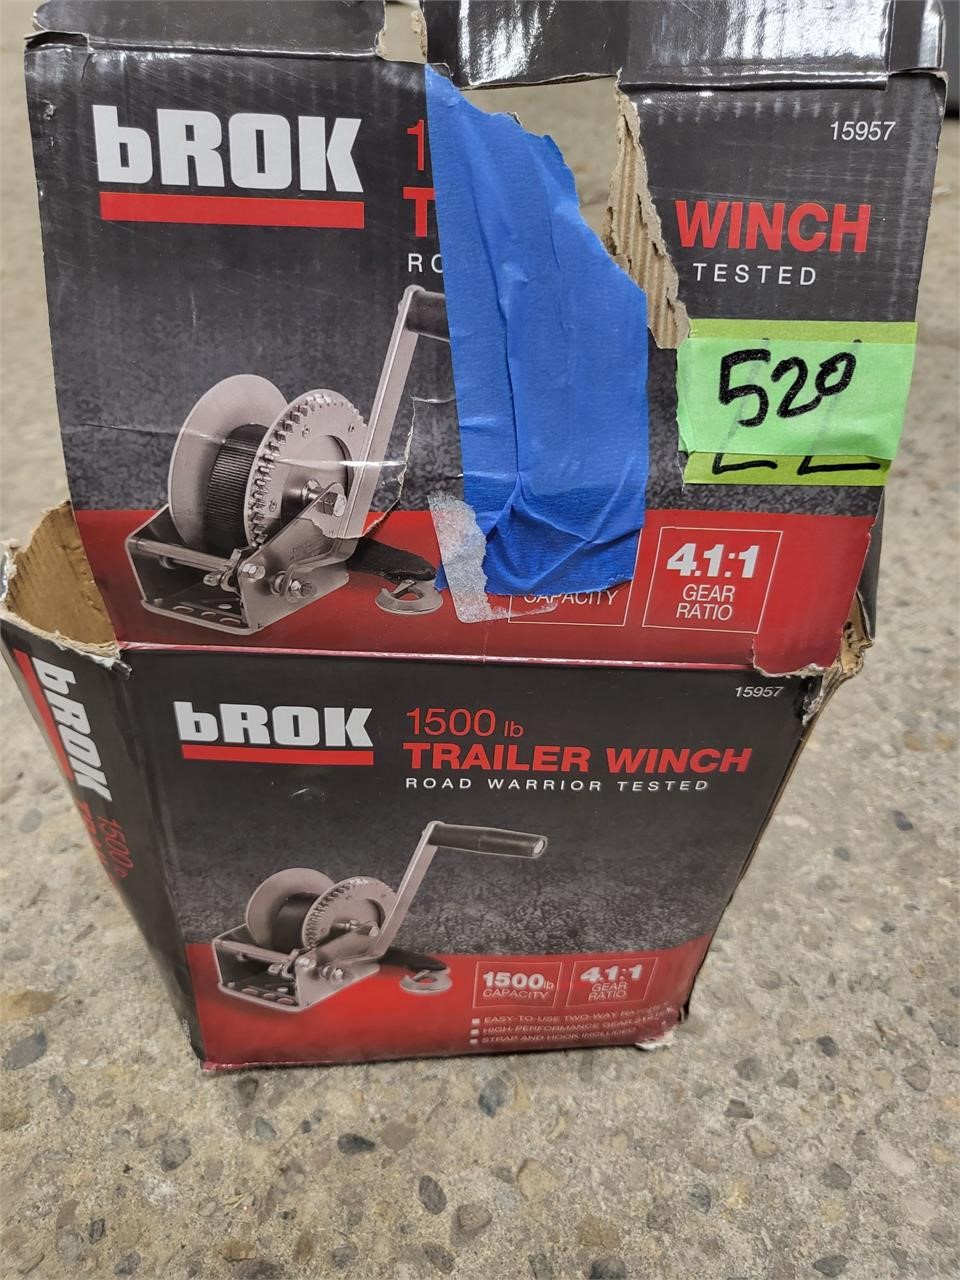 Brok 1500lb trailer winch